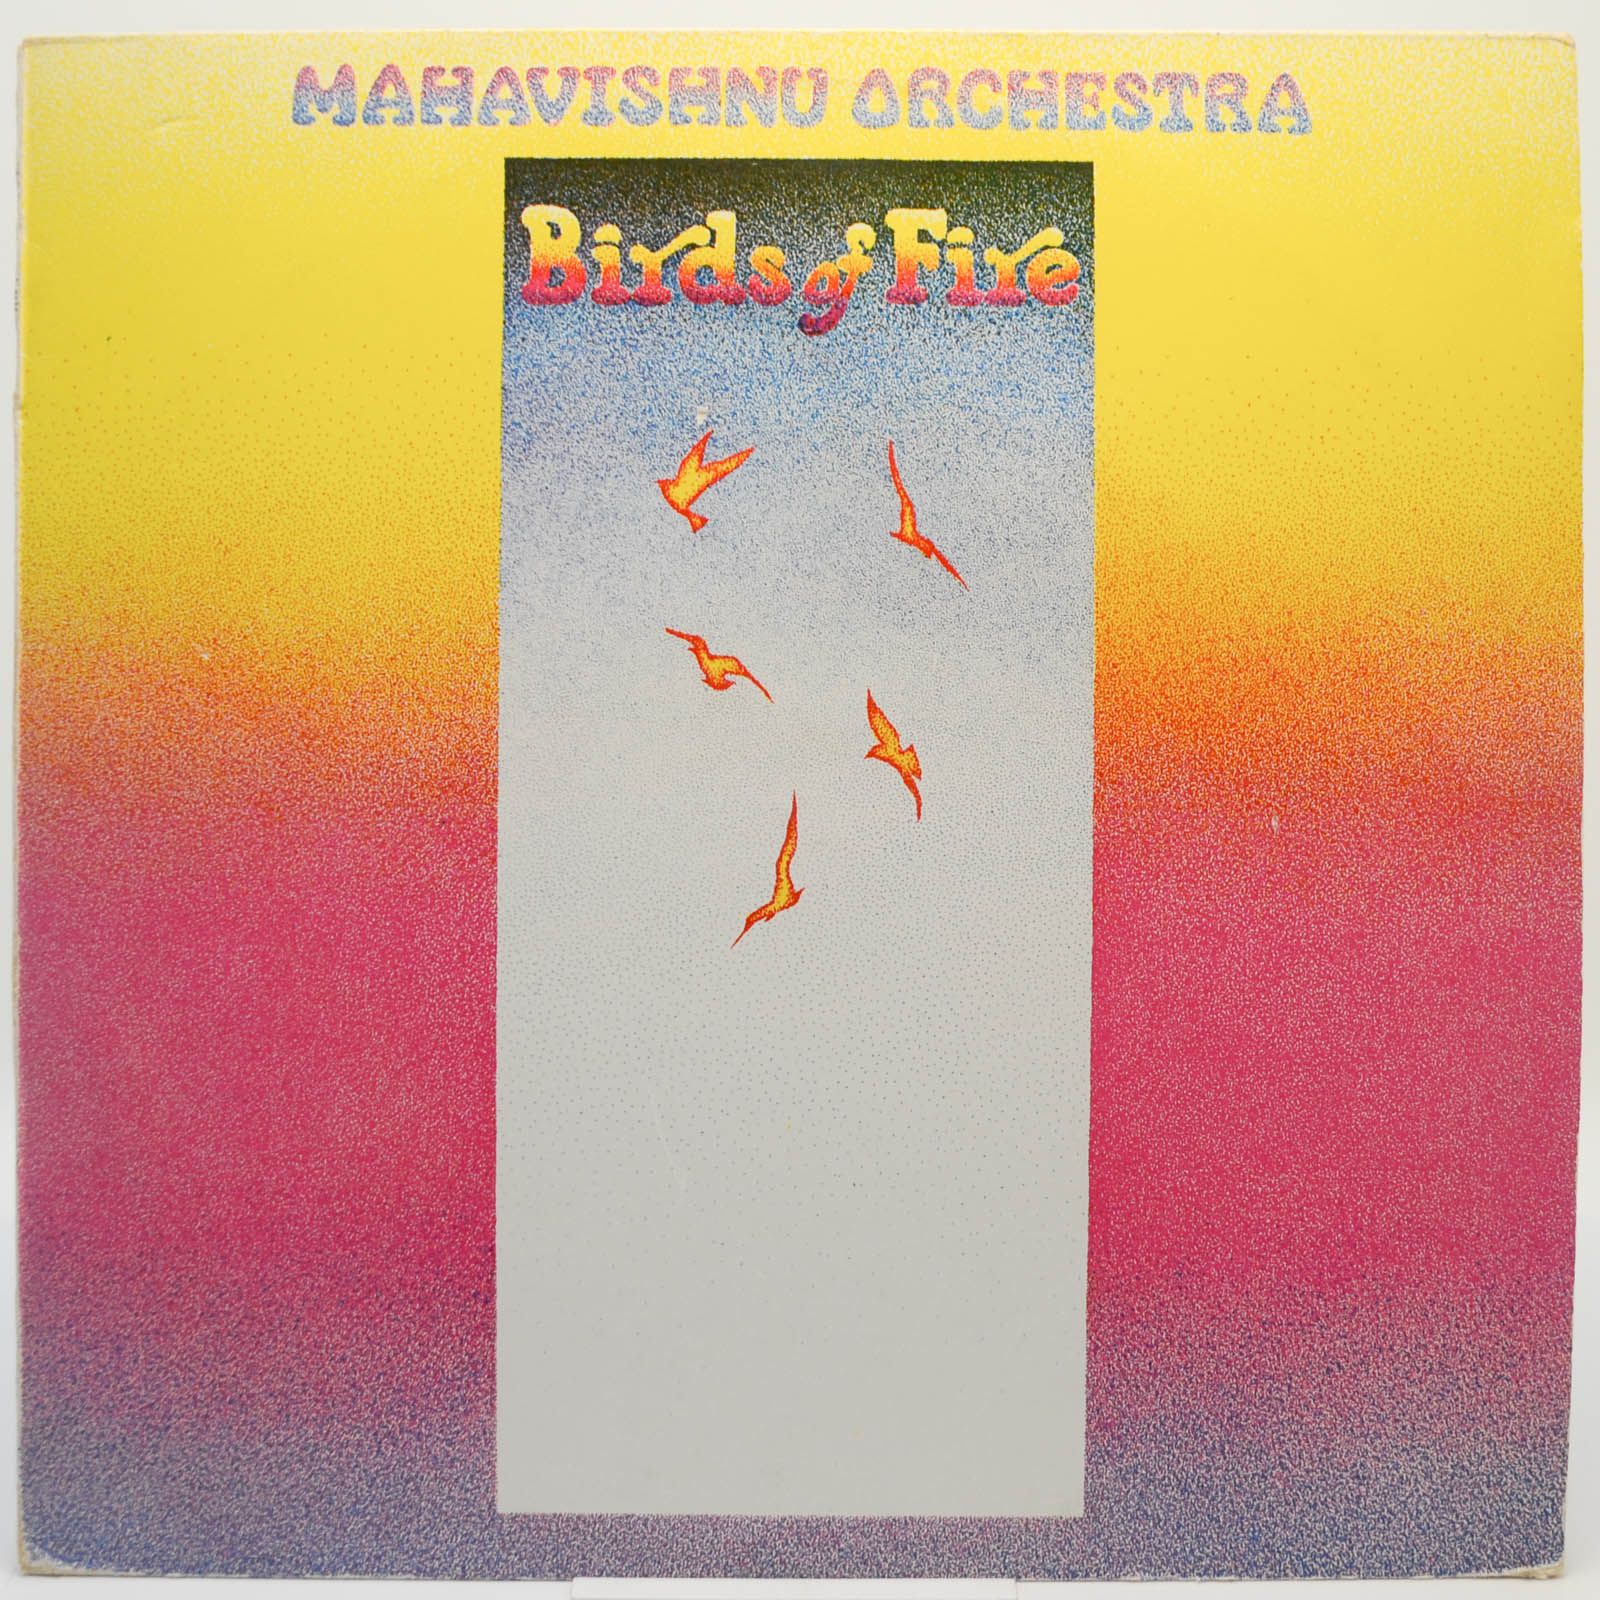 Mahavishnu Orchestra — Birds Of Fire, 1973